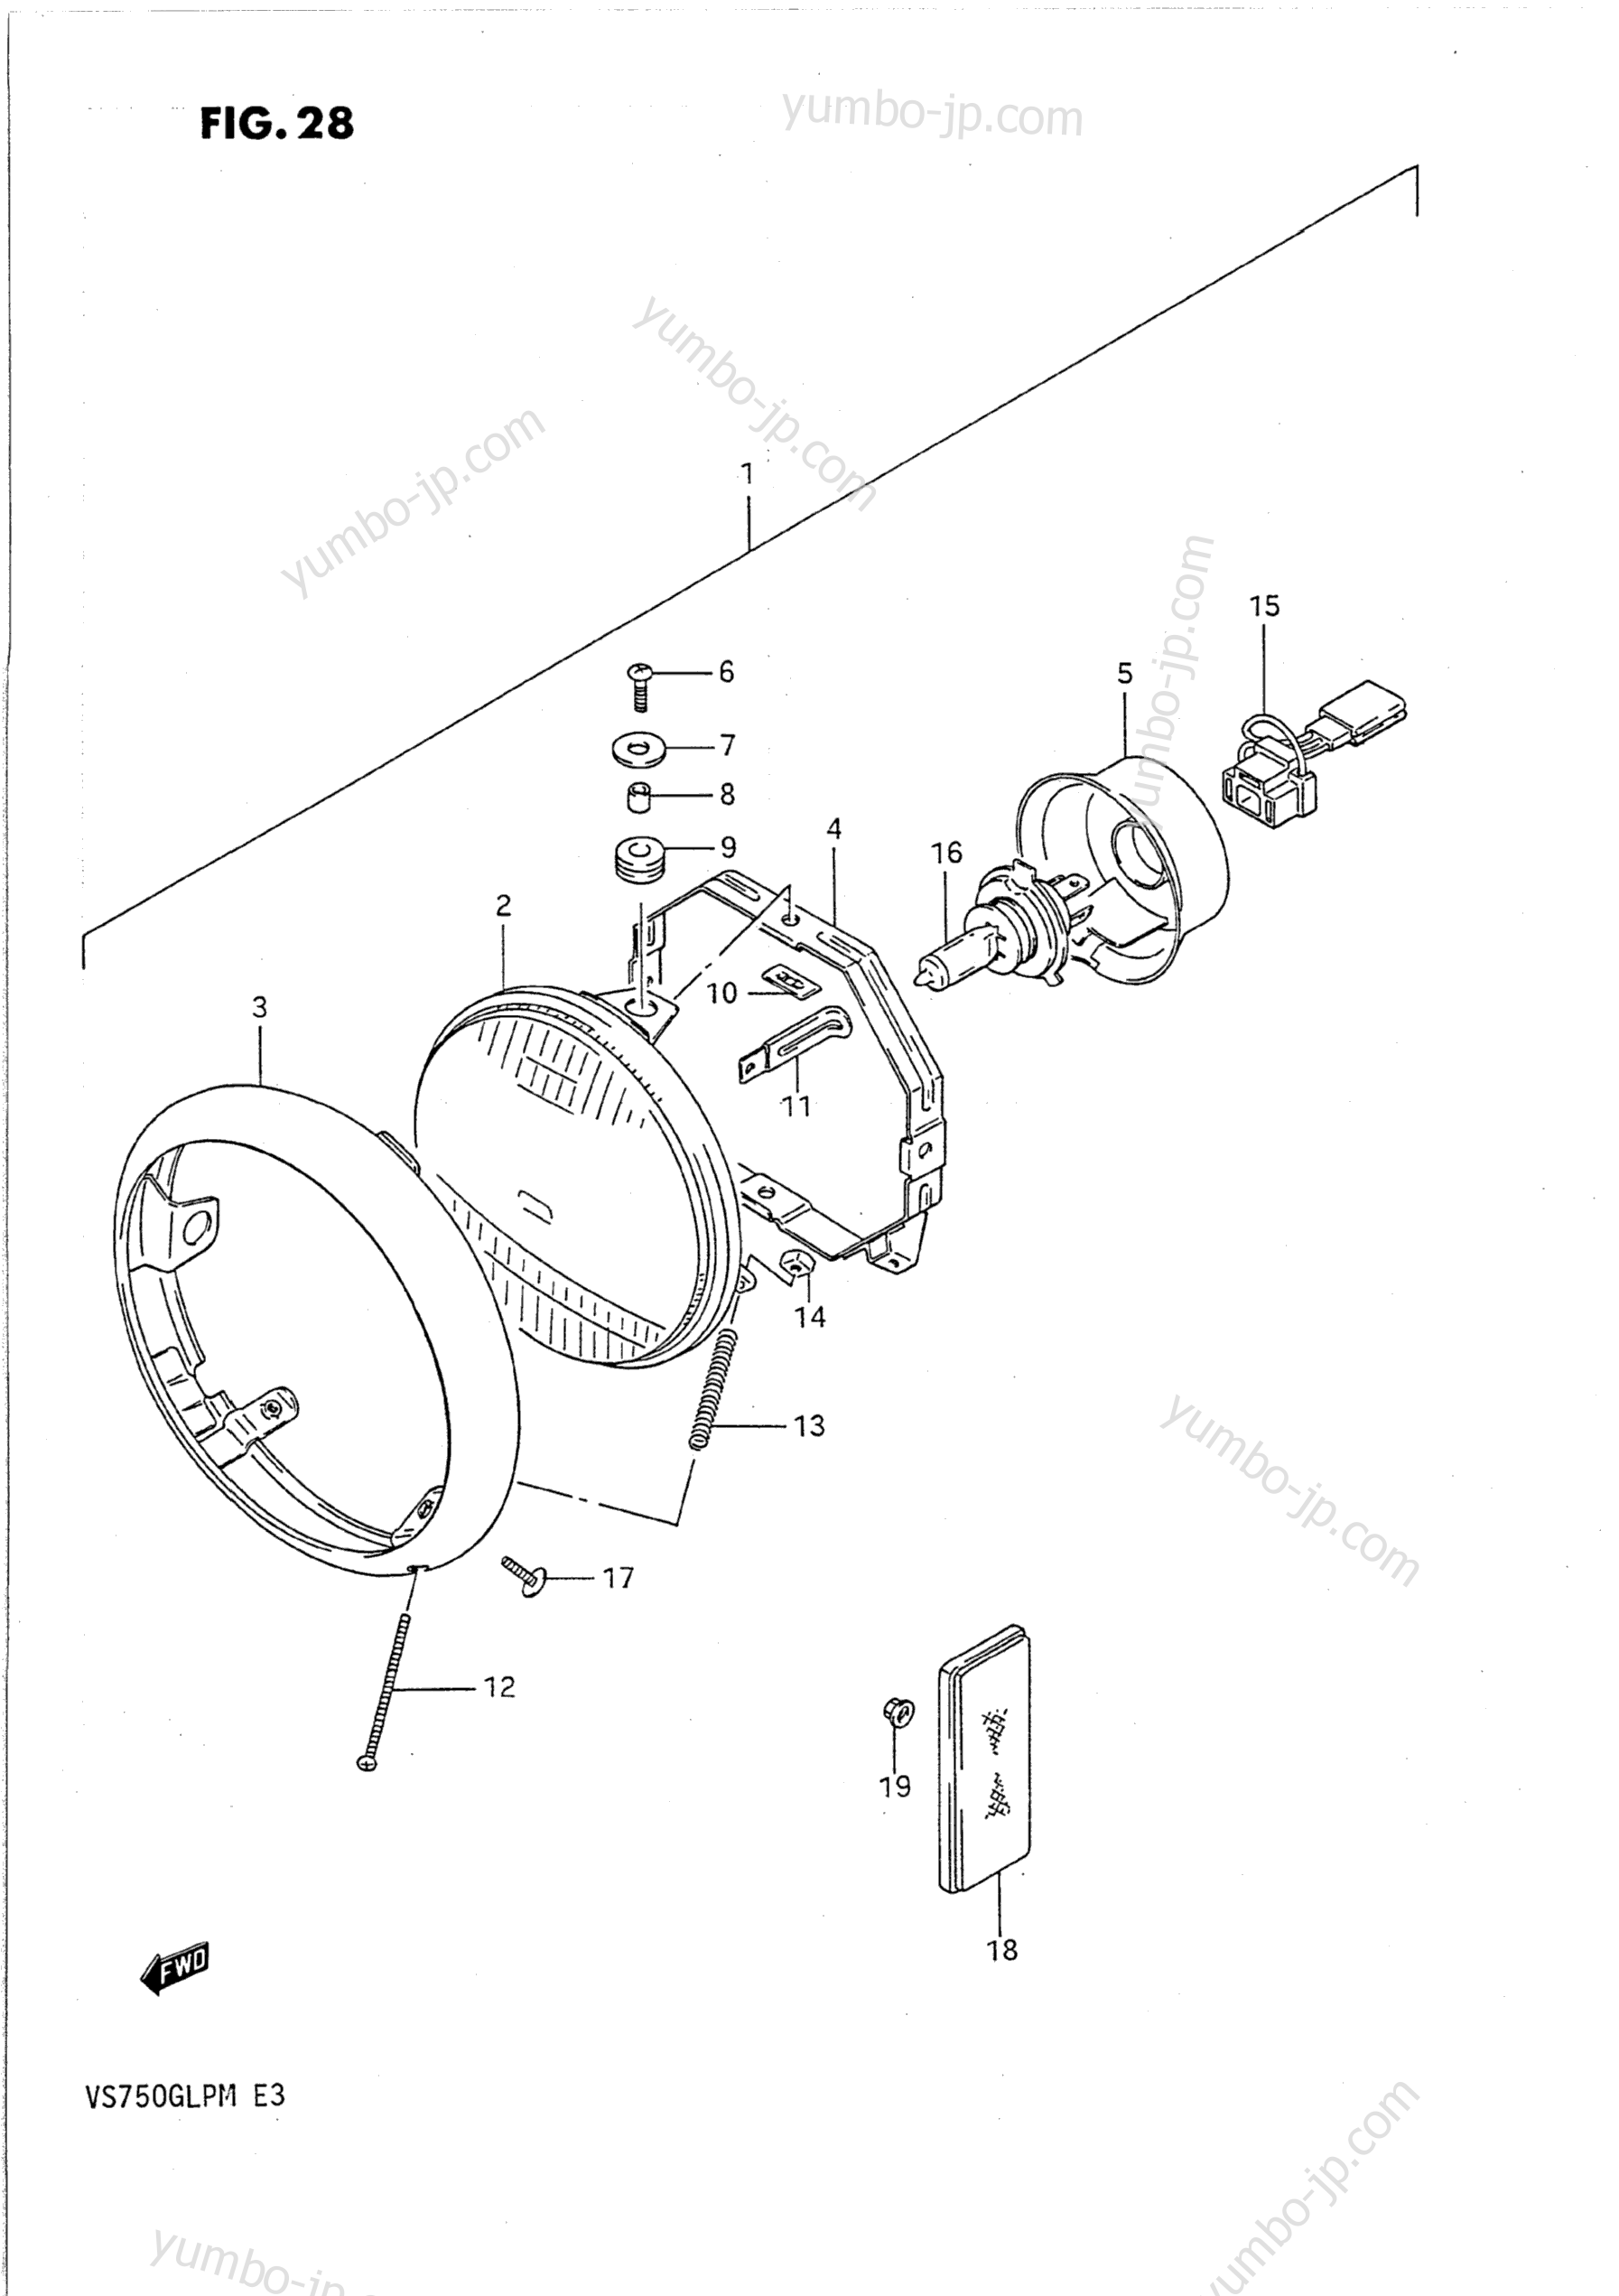 HEADLAMP for motorcycles SUZUKI Intruder (VS750GLP) 1990 year